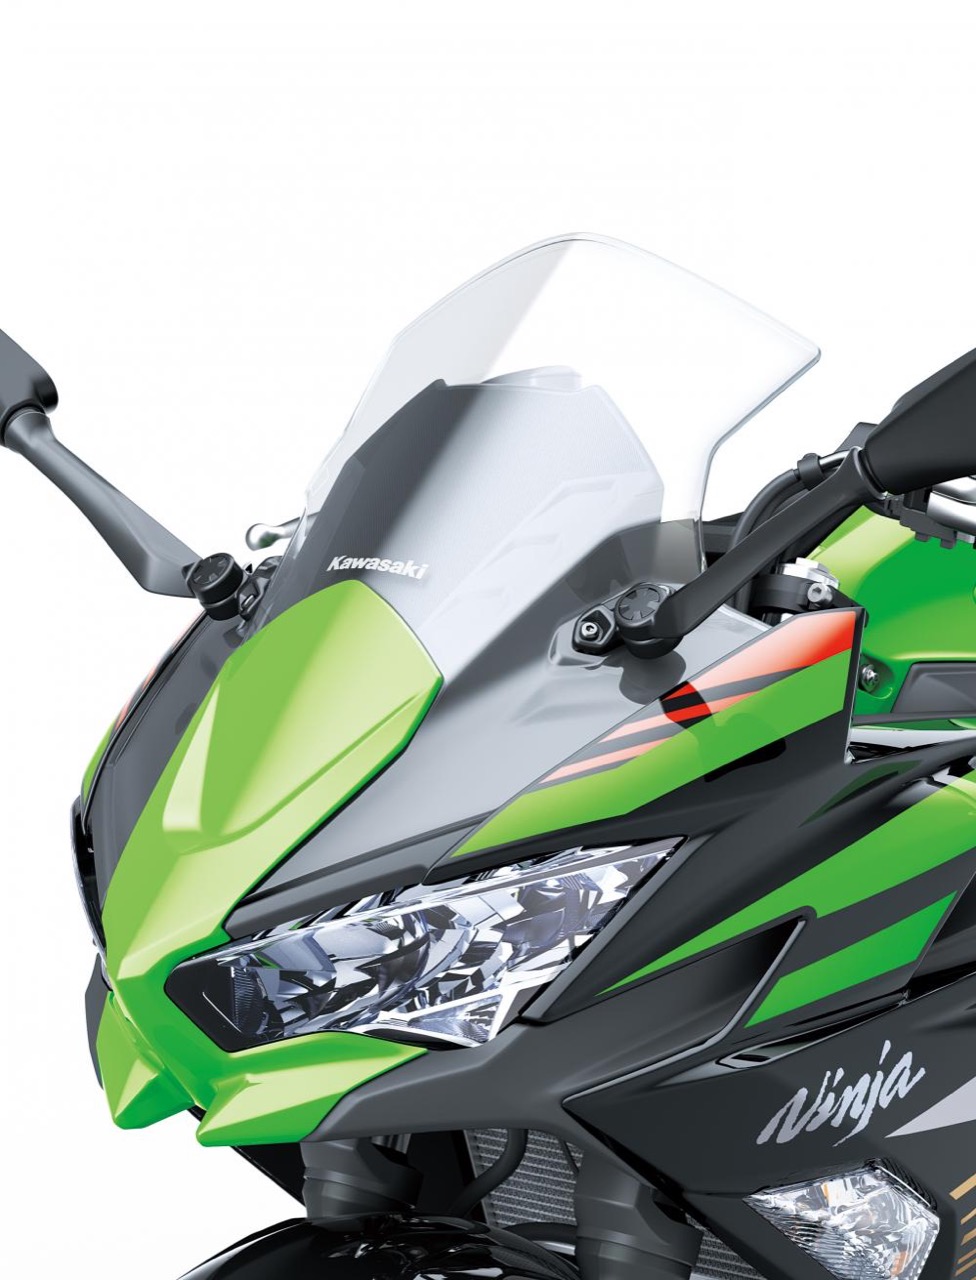 Kawasaki Ninja 650 Model Year 2020 - foto 